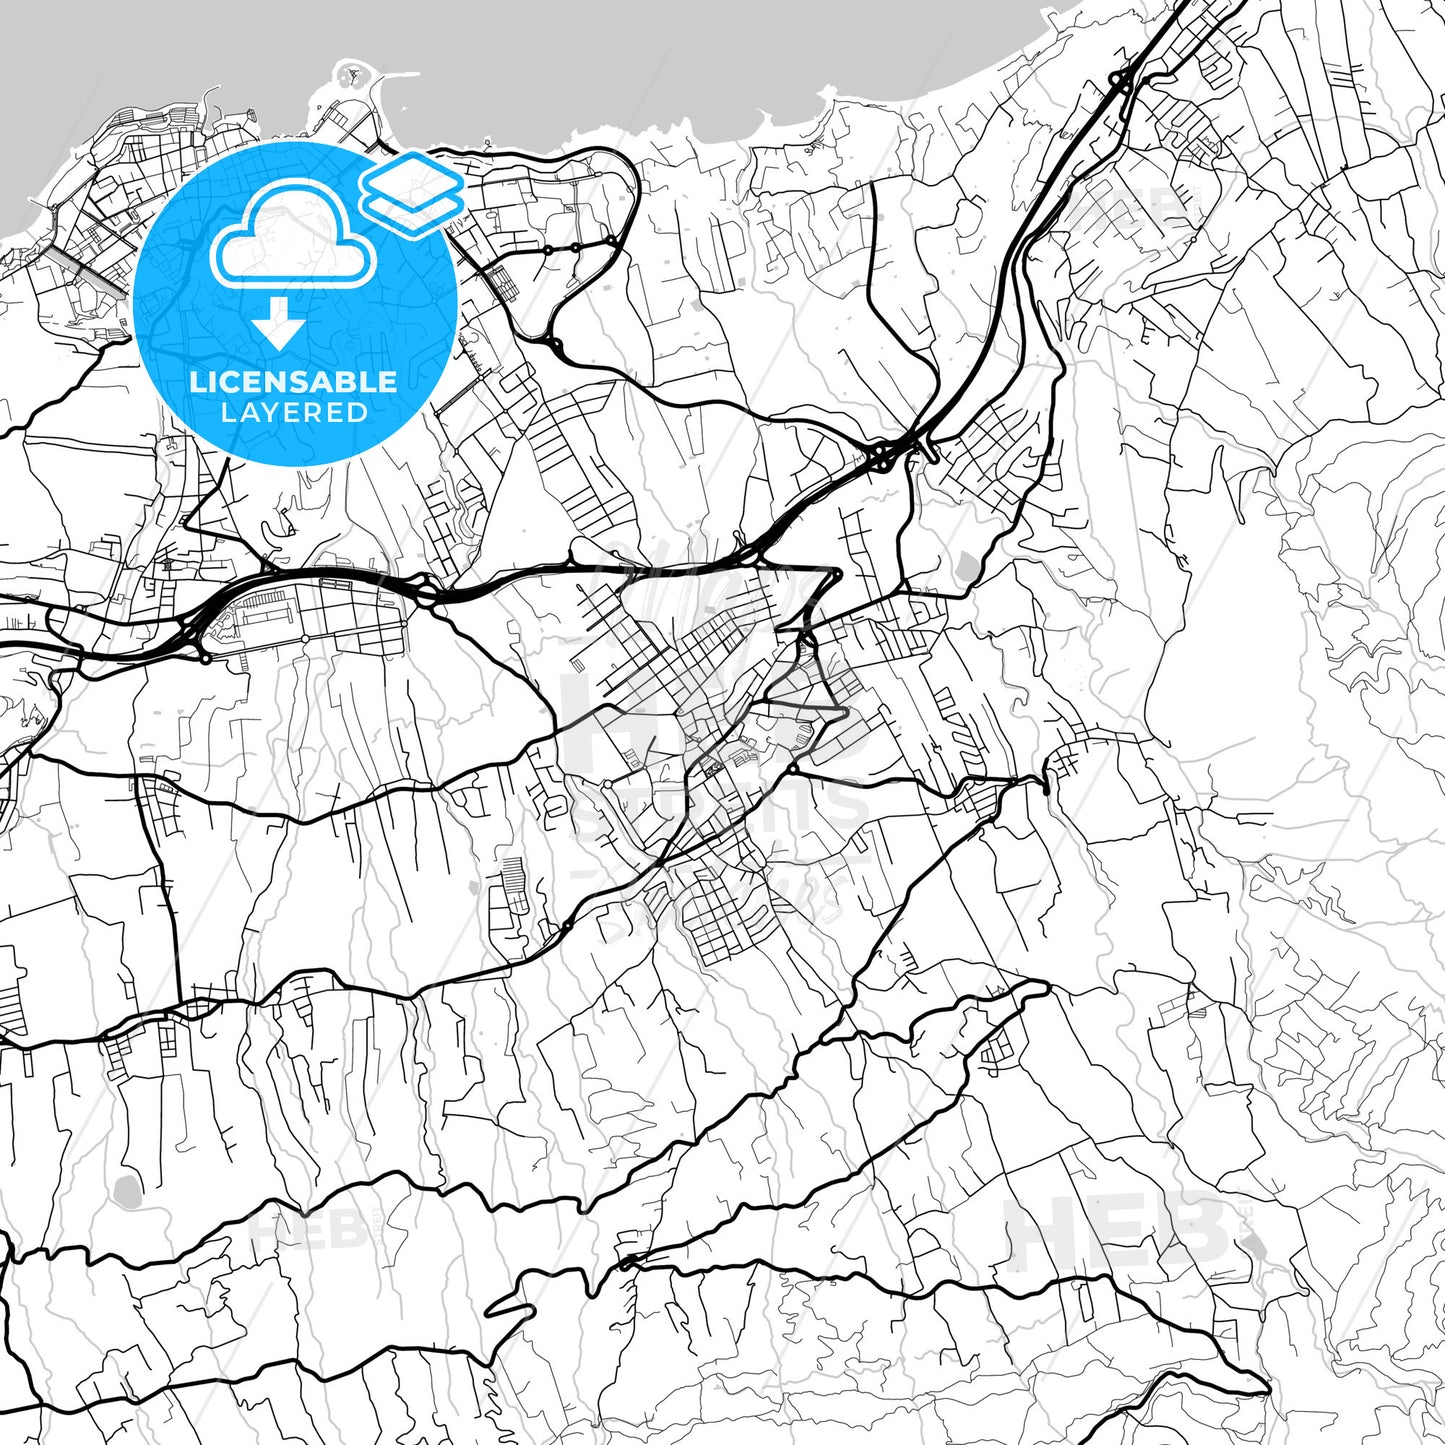 Layered PDF map of La Orotava, Santa Cruz de Tenerife, Spain